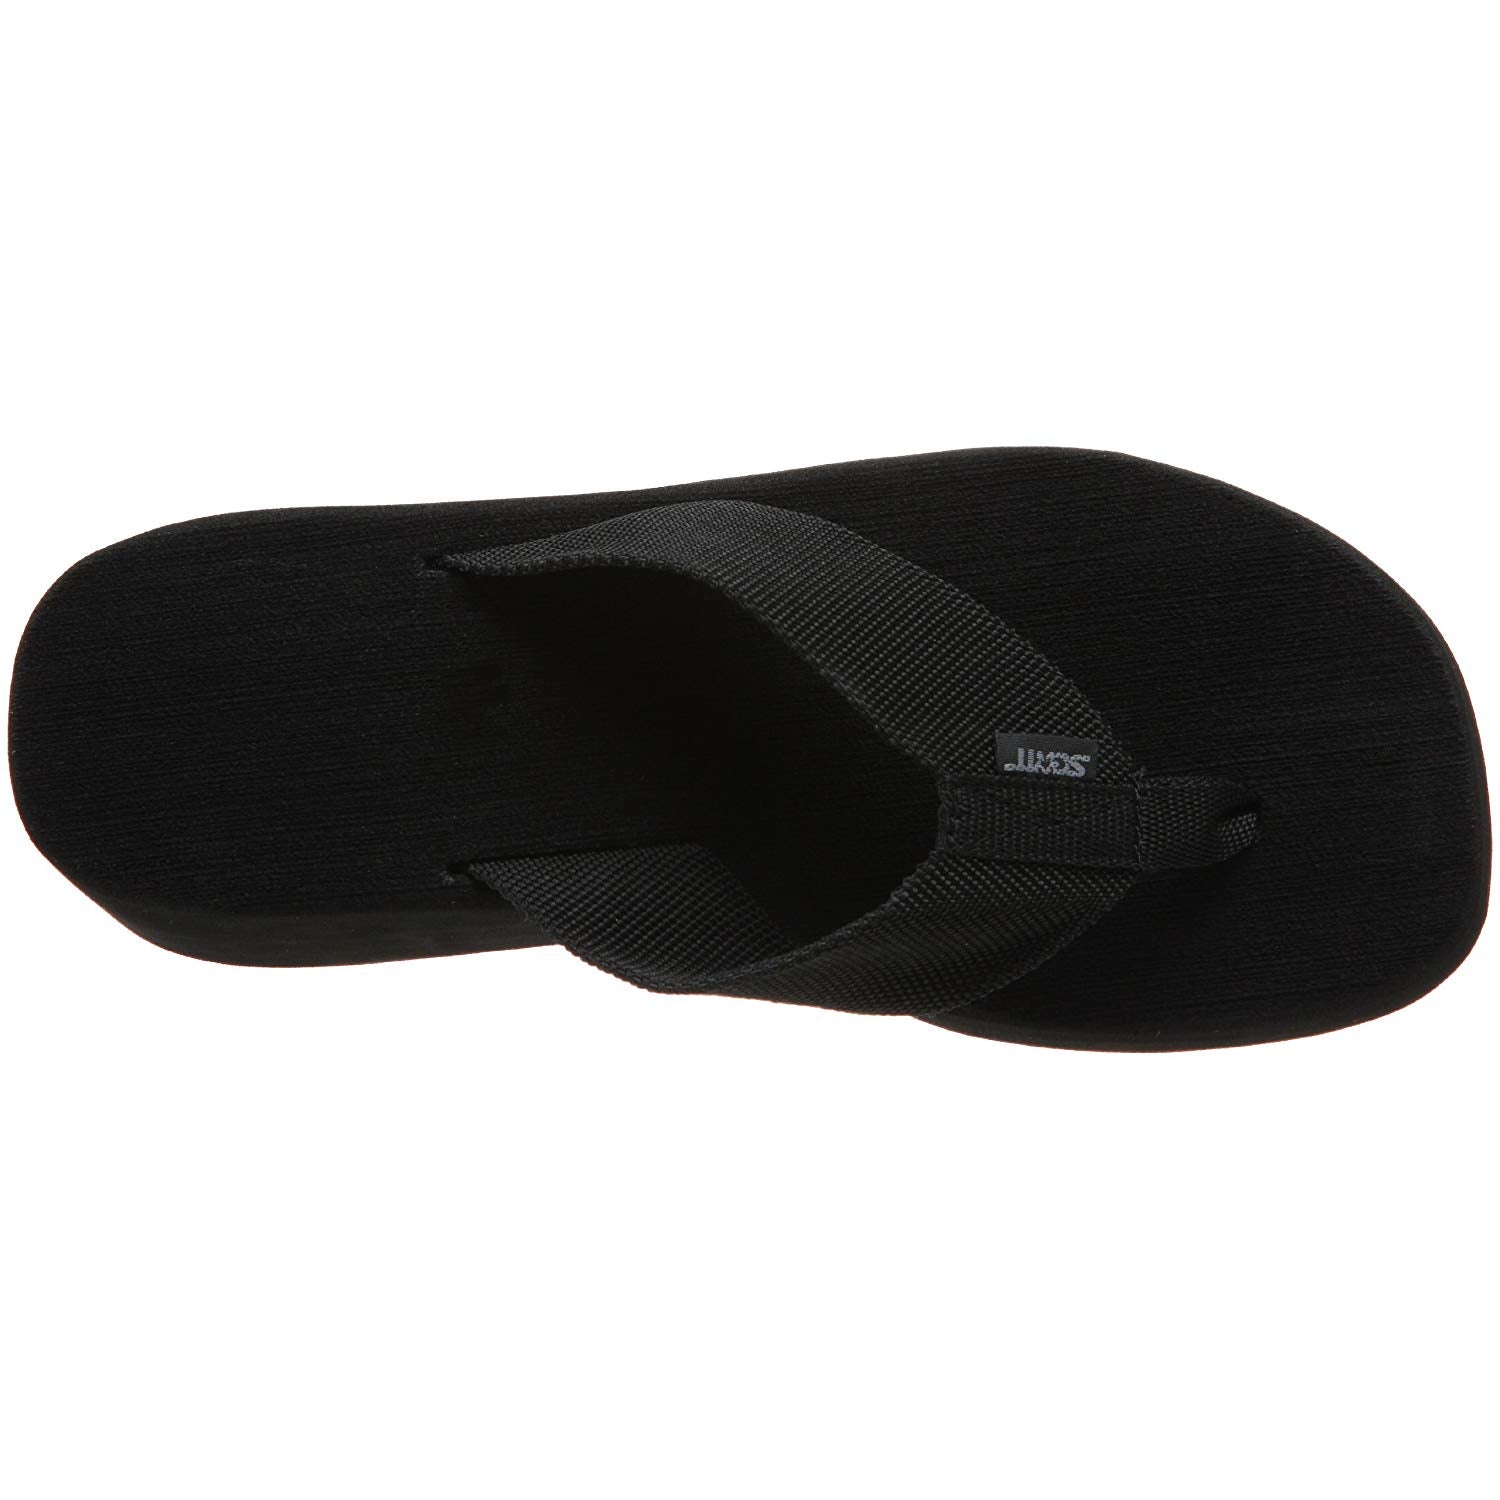 Scott Wedge Wahine Flip Flops | Tall Platform Sandals - AlohaShoes.com